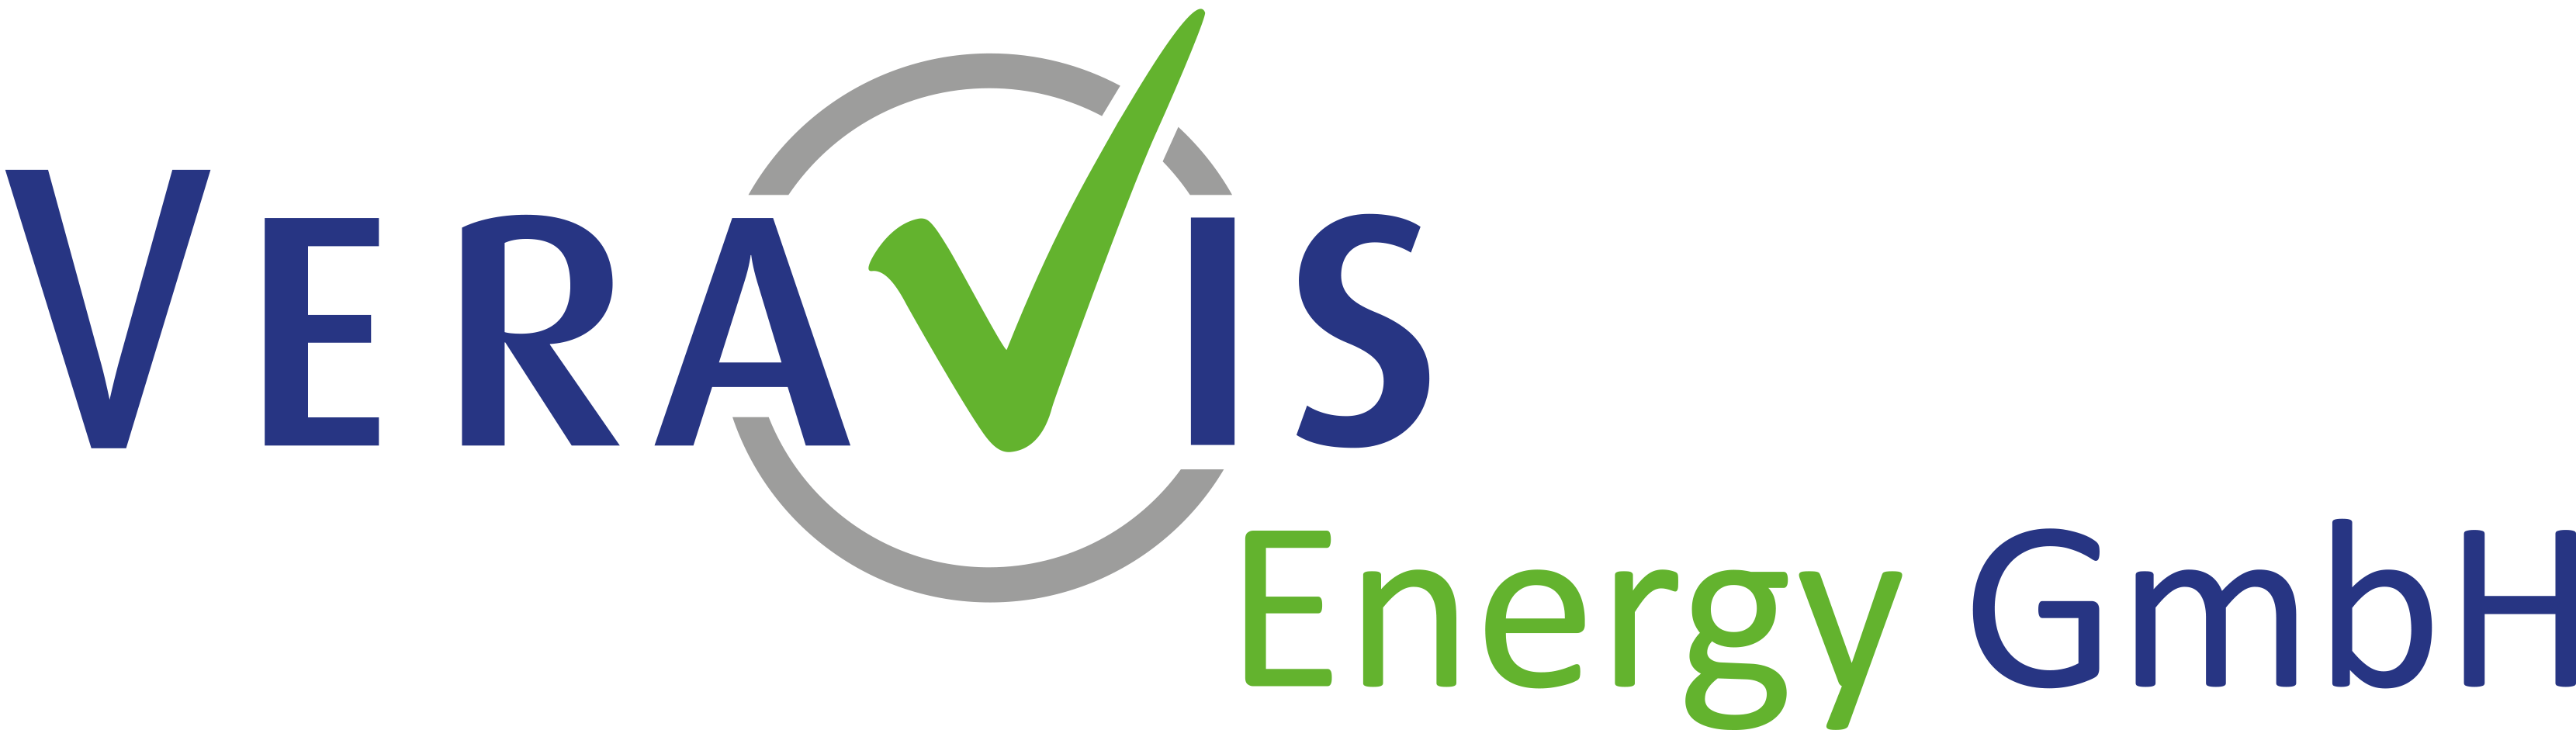 Veravis Energy